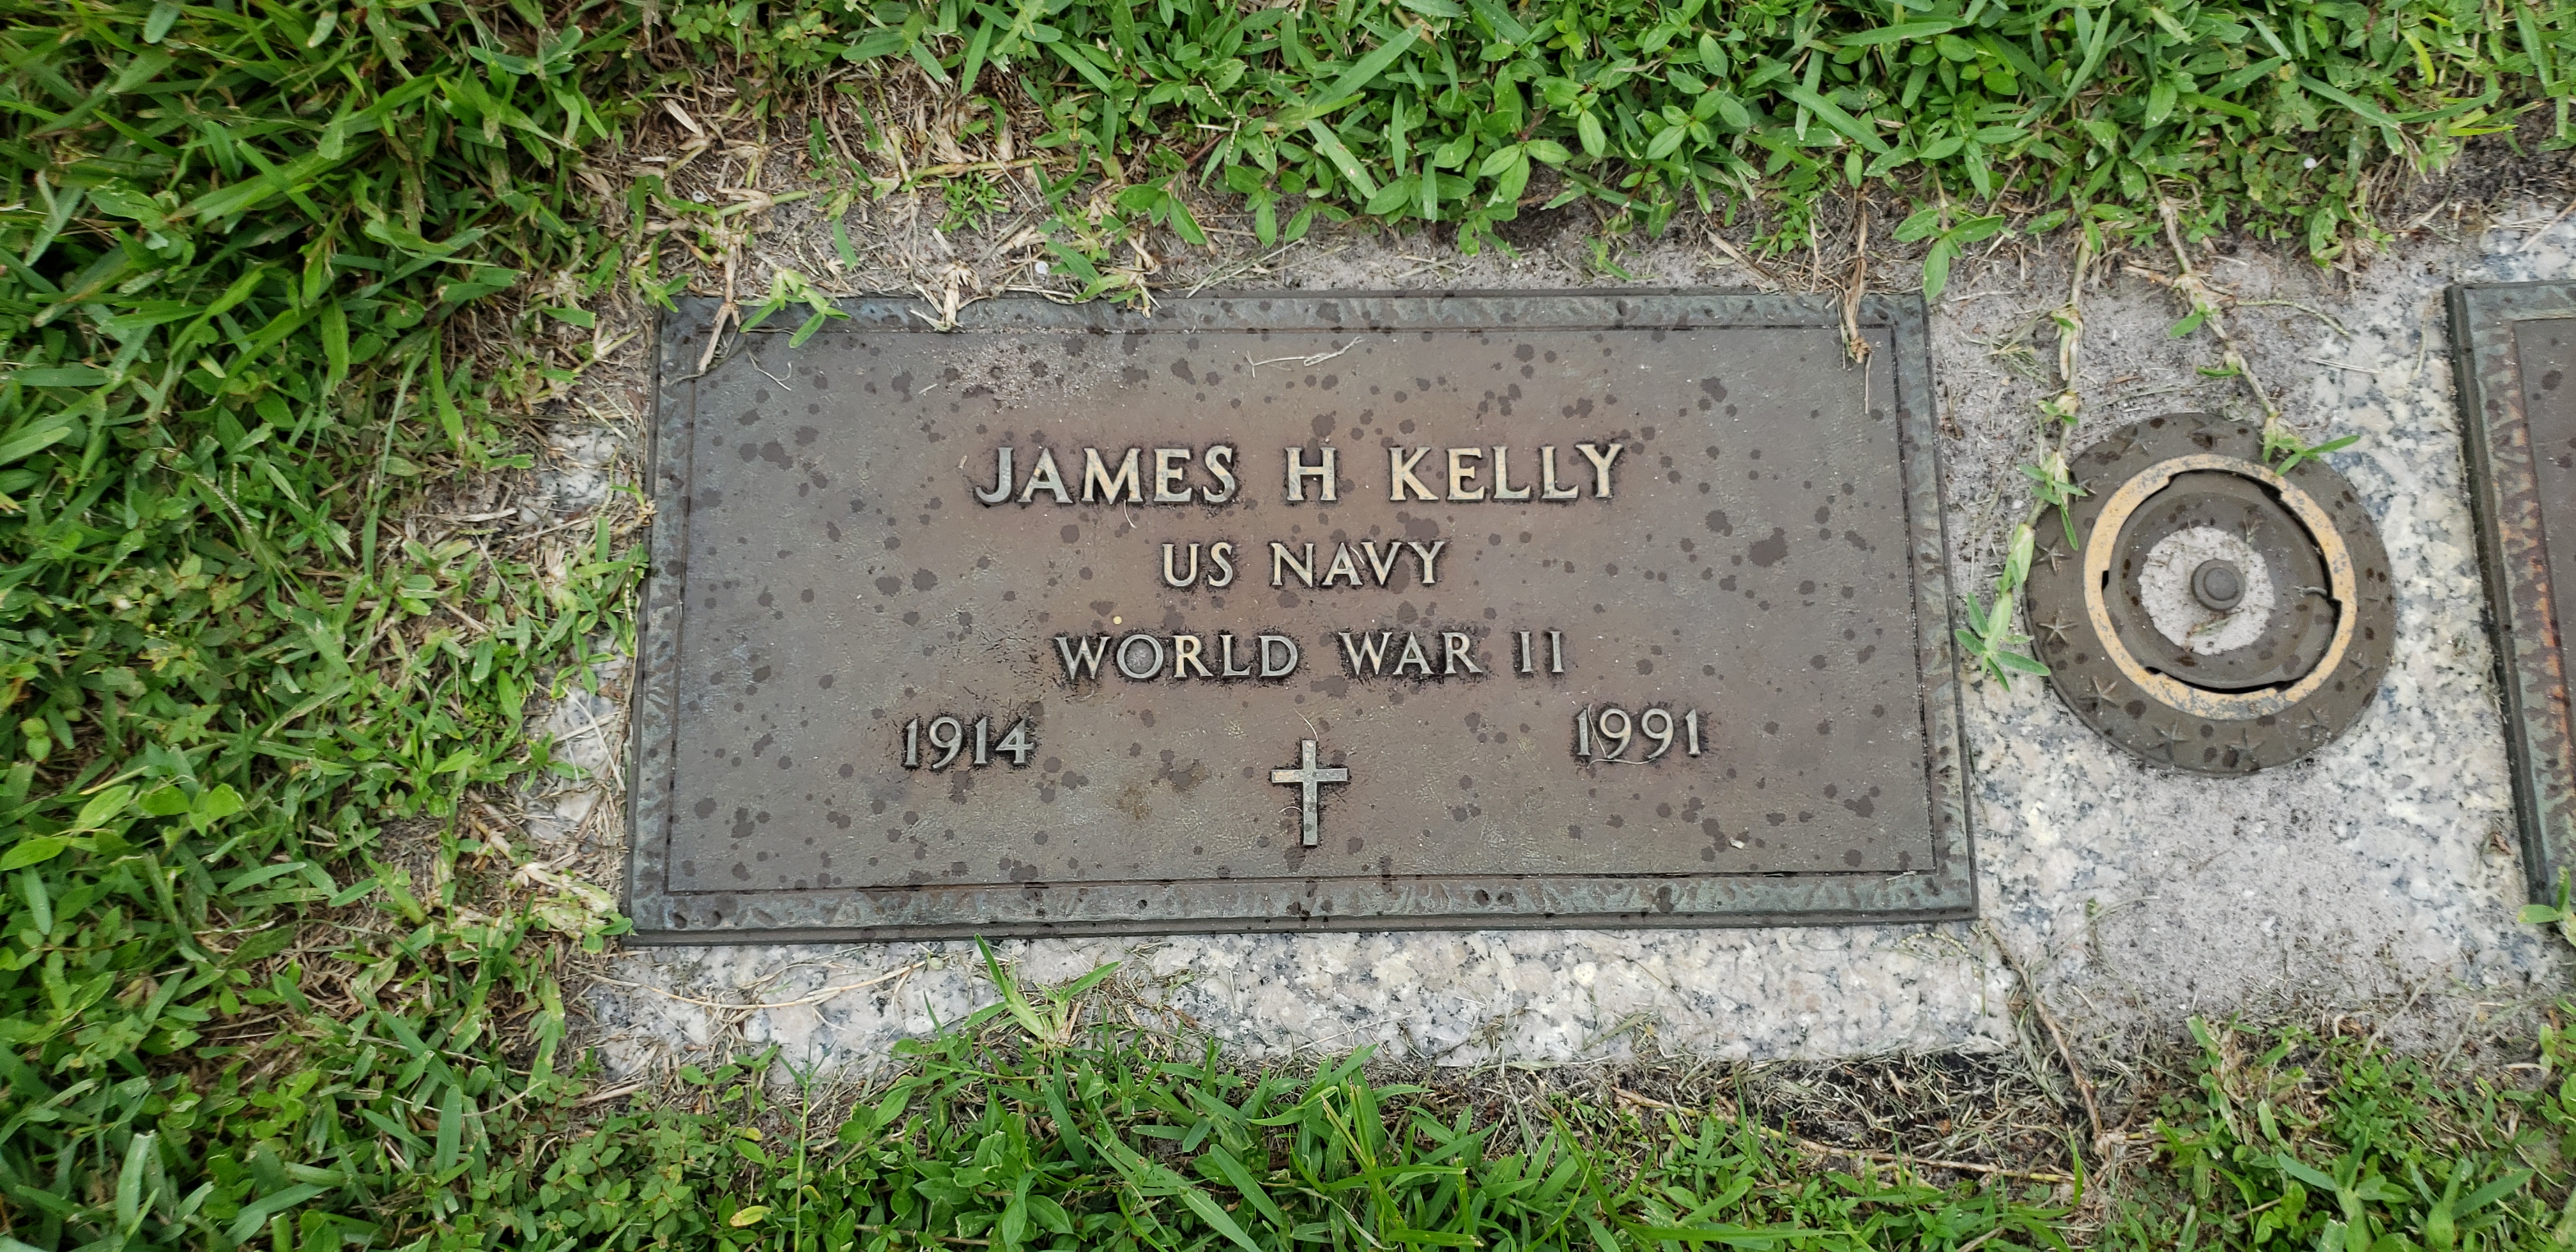 James H Kelly